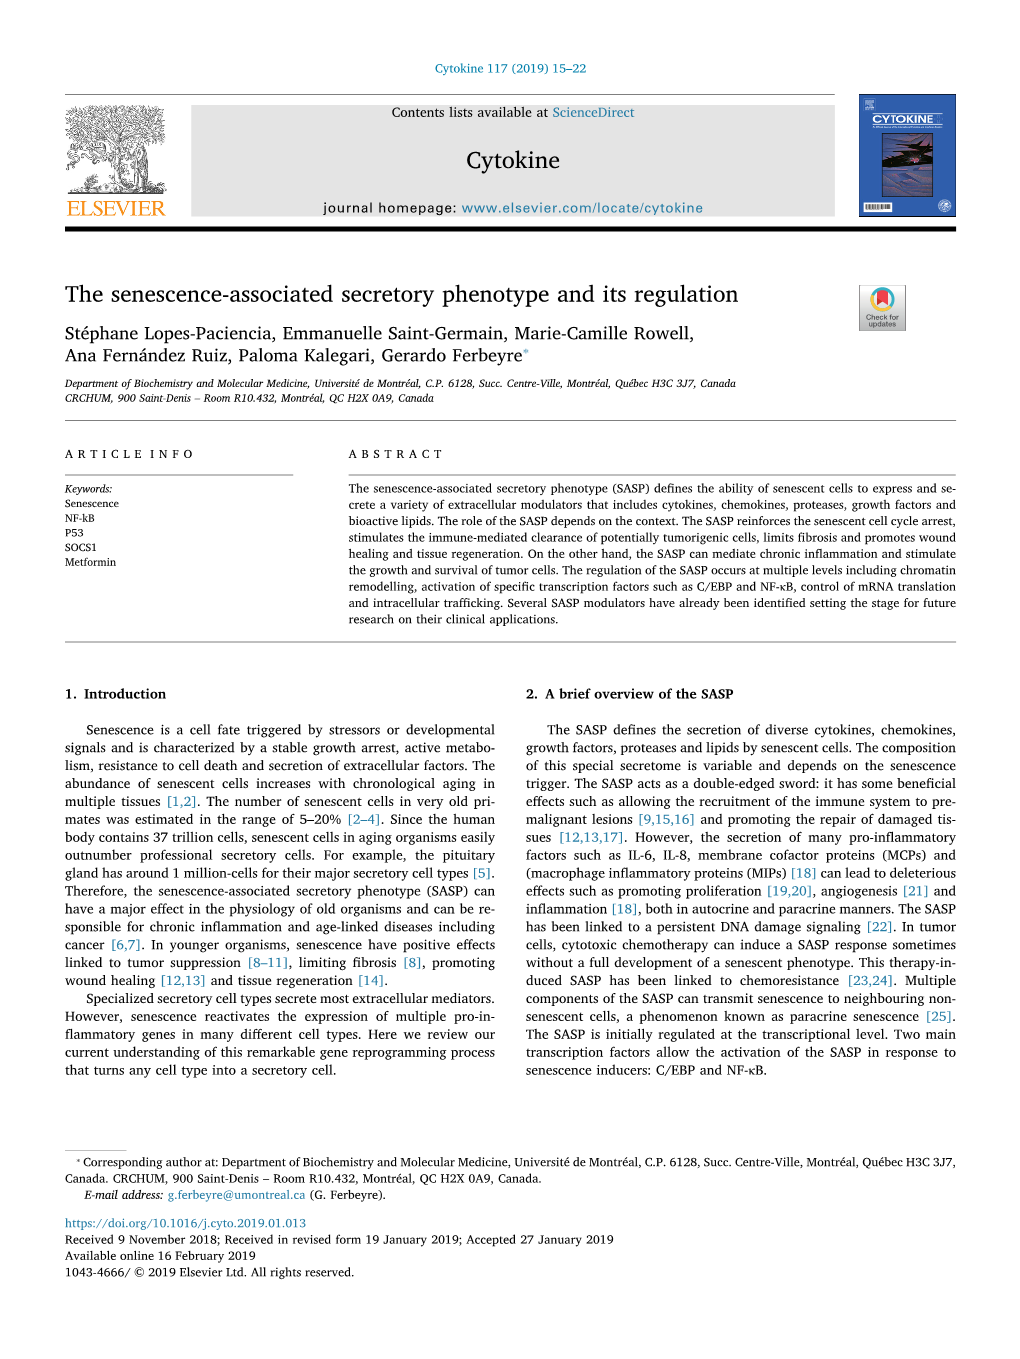 The Senescence-Associated Secretory Phenotype and Its Regulation